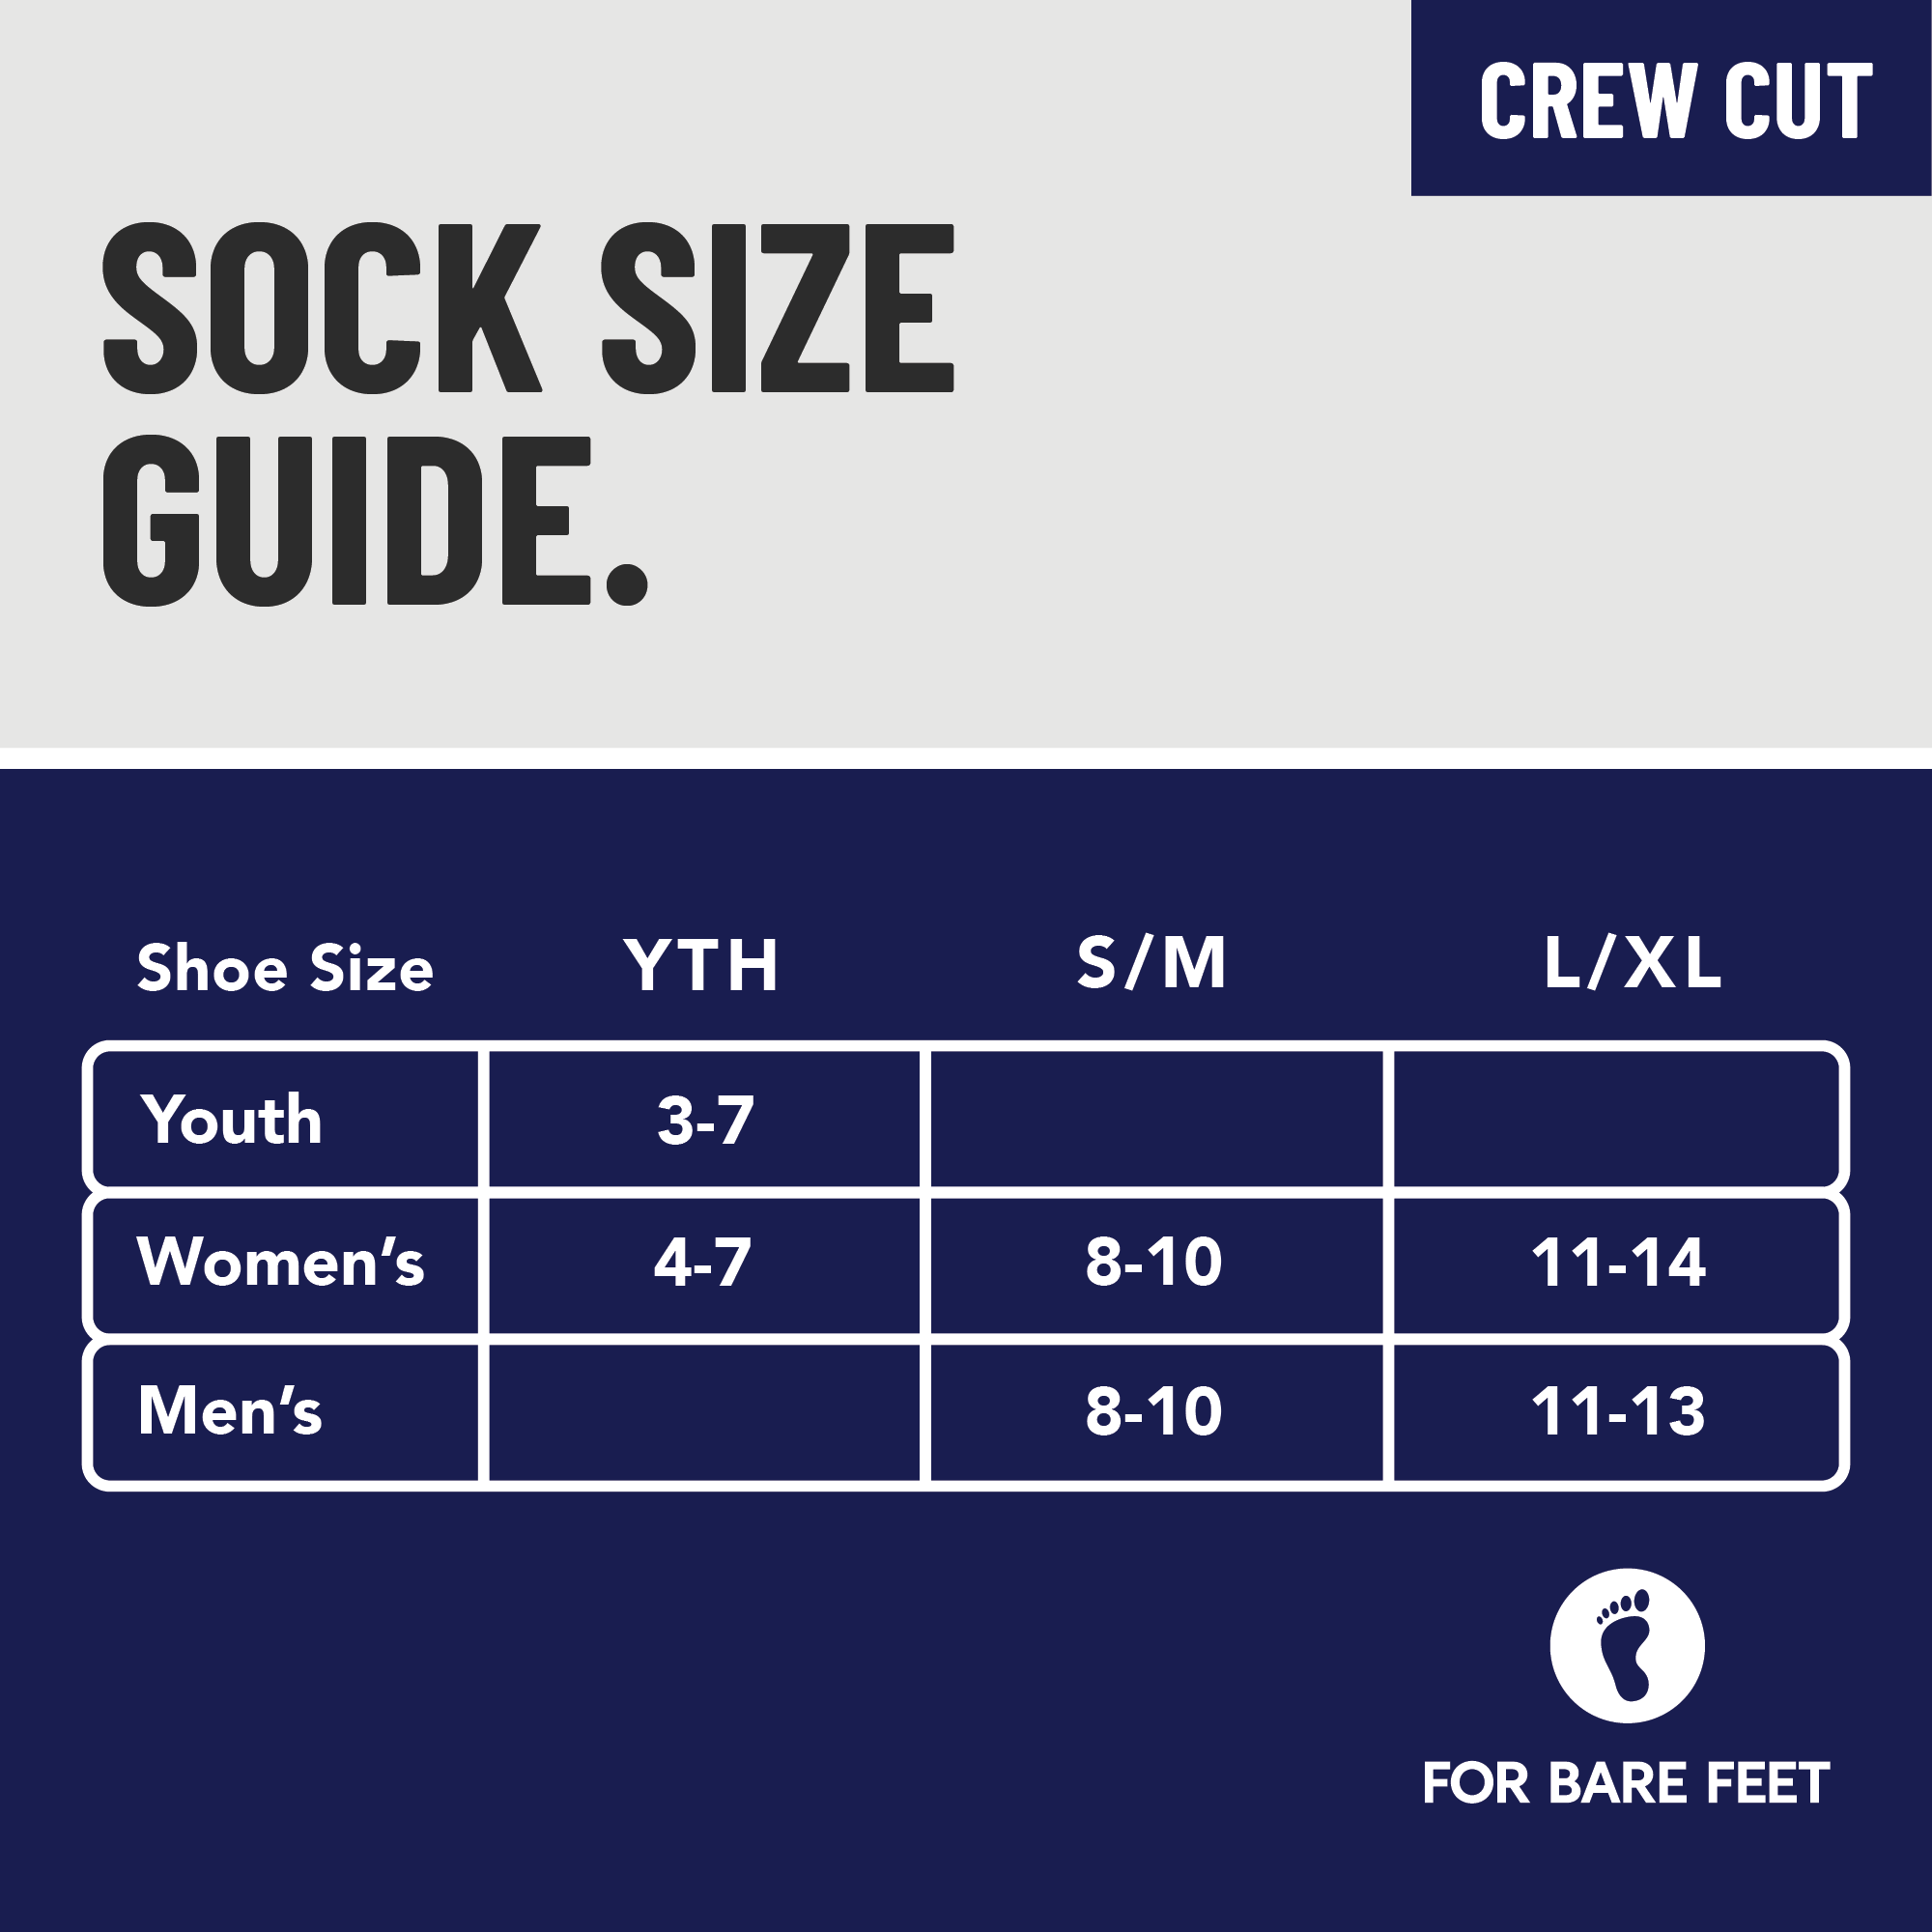 Houston Rockets Breakout Premium Crew Socks